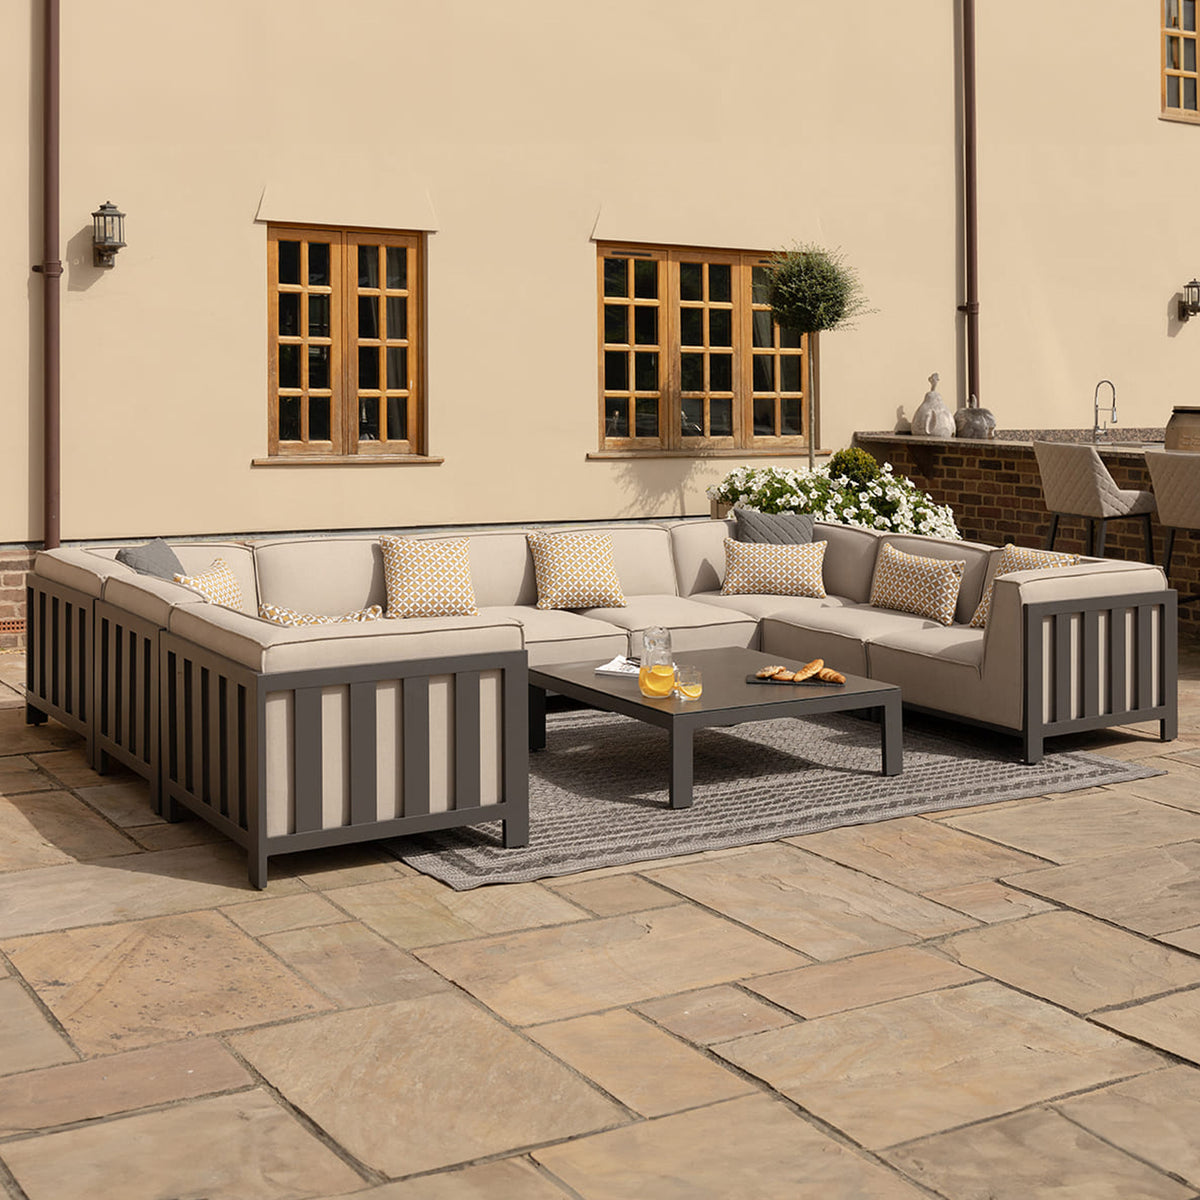 Maze Ibiza U Shape Outdoor Sofa Set With Square Table from Roseland Furniture